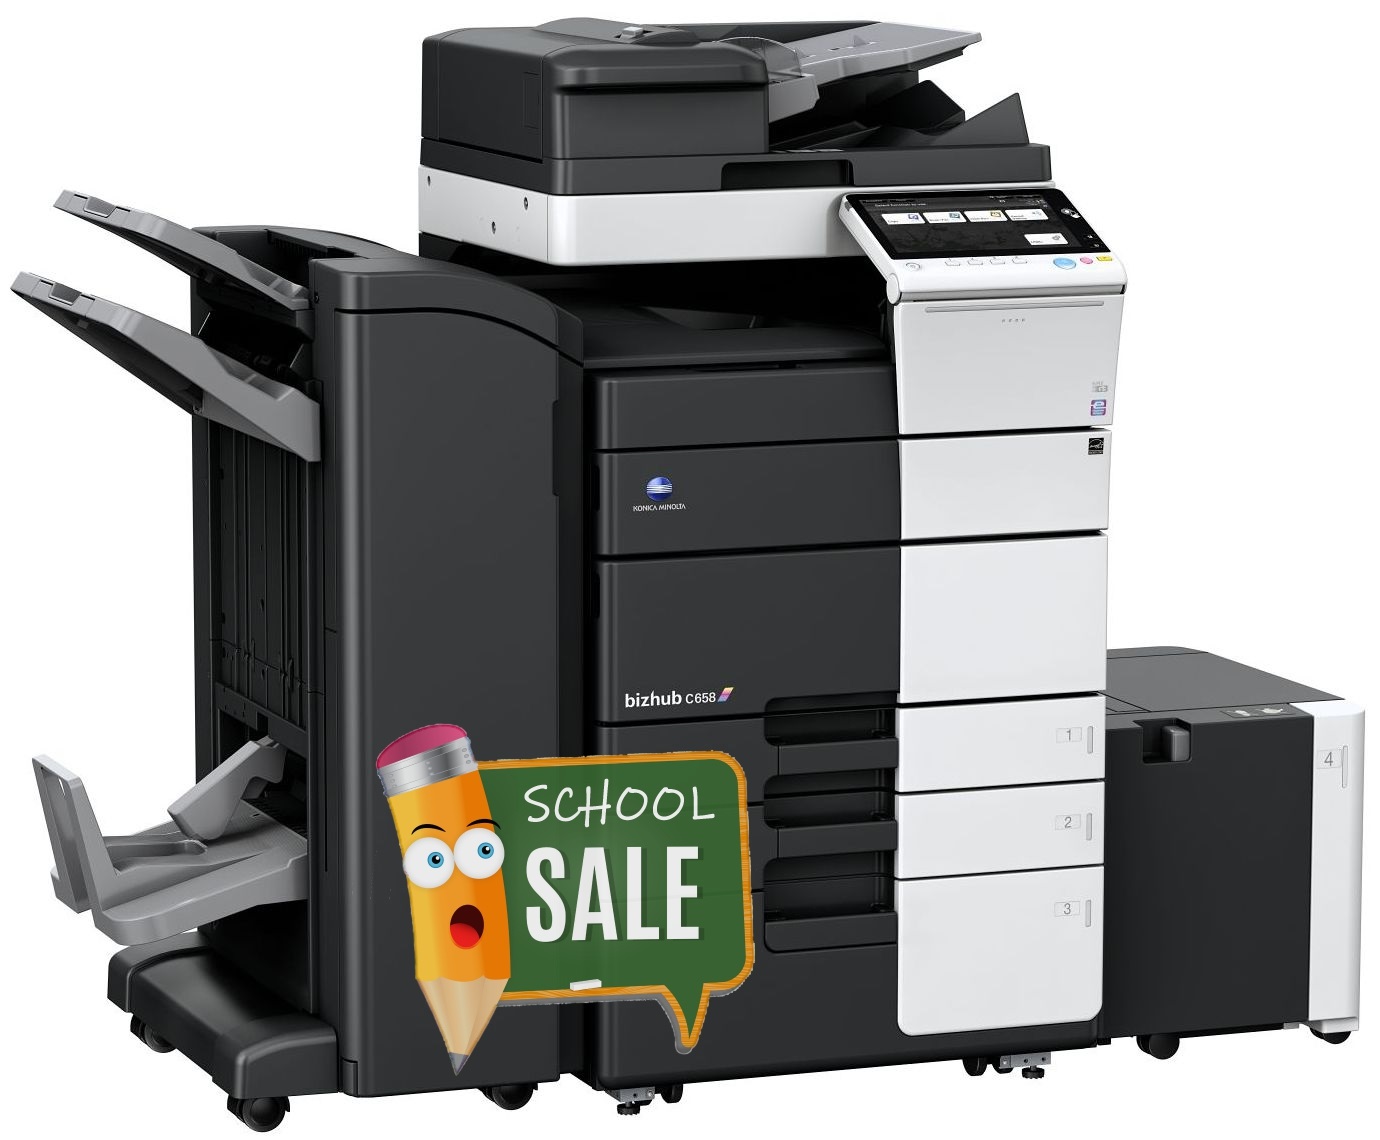 Konica Minolta Bizhub C658 Colour Copier Printer Rental Price Offer